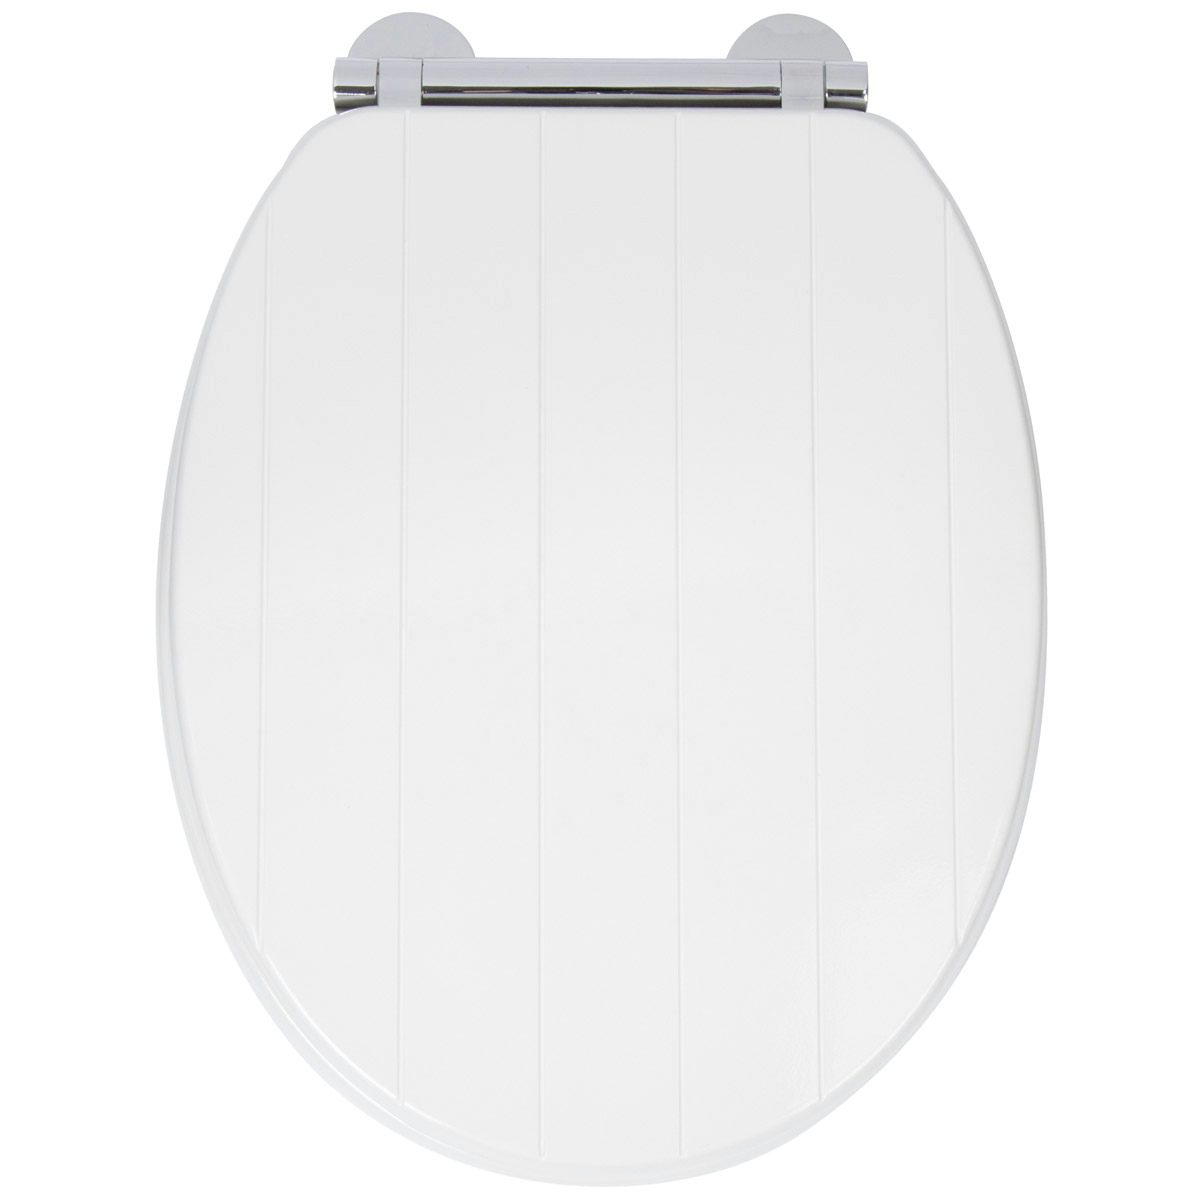 Croydex Portland flexi fix soft close quick release tongue & groove white toilet seat